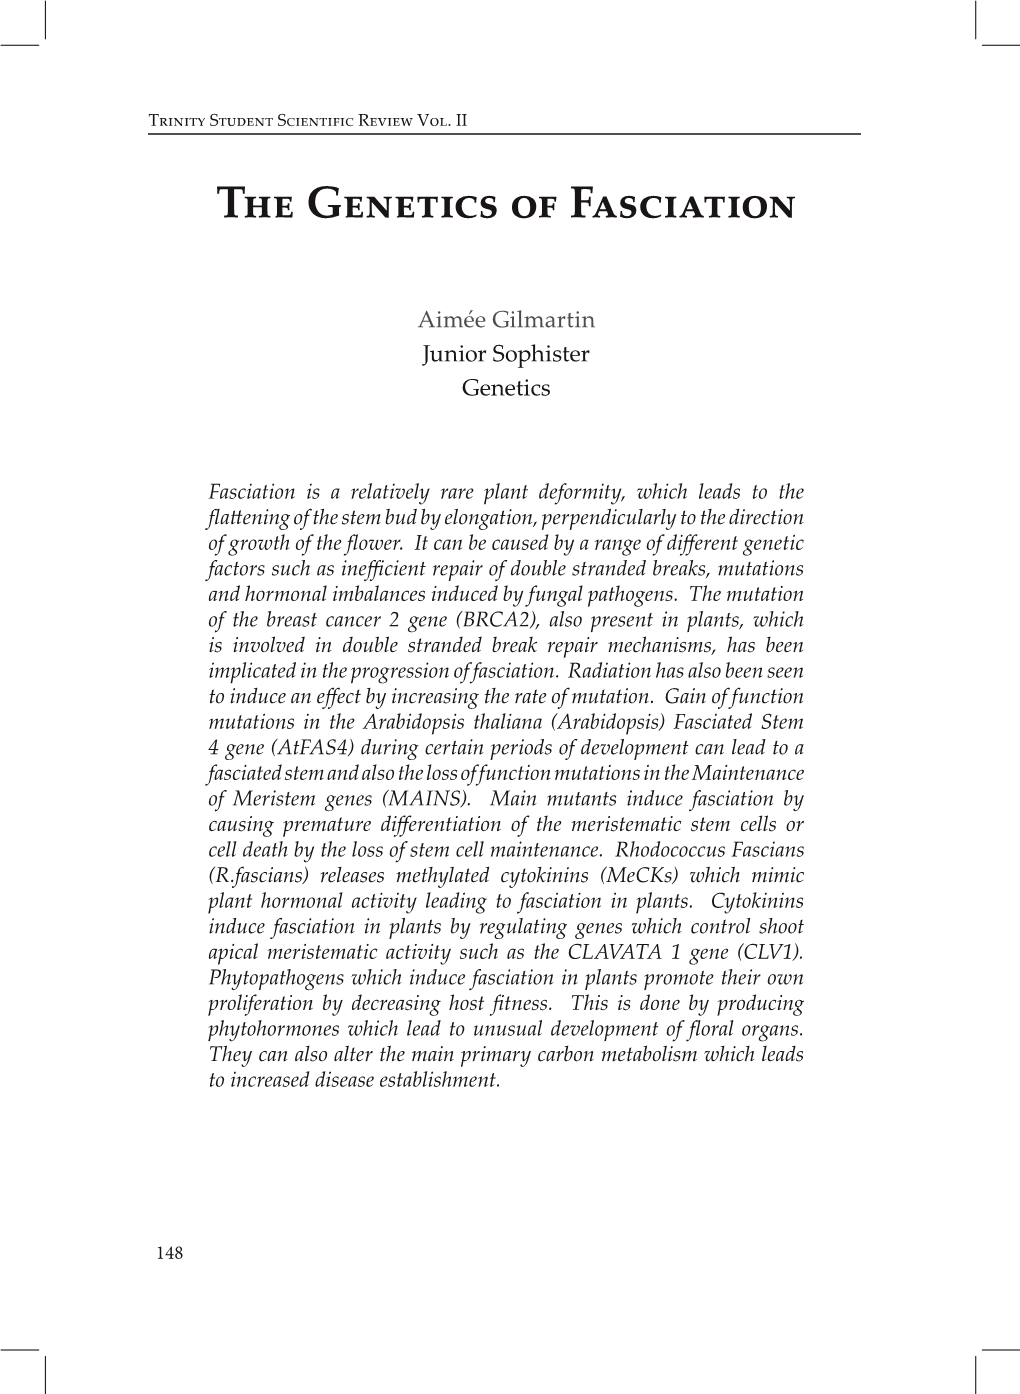 The Genetics of Fasciation